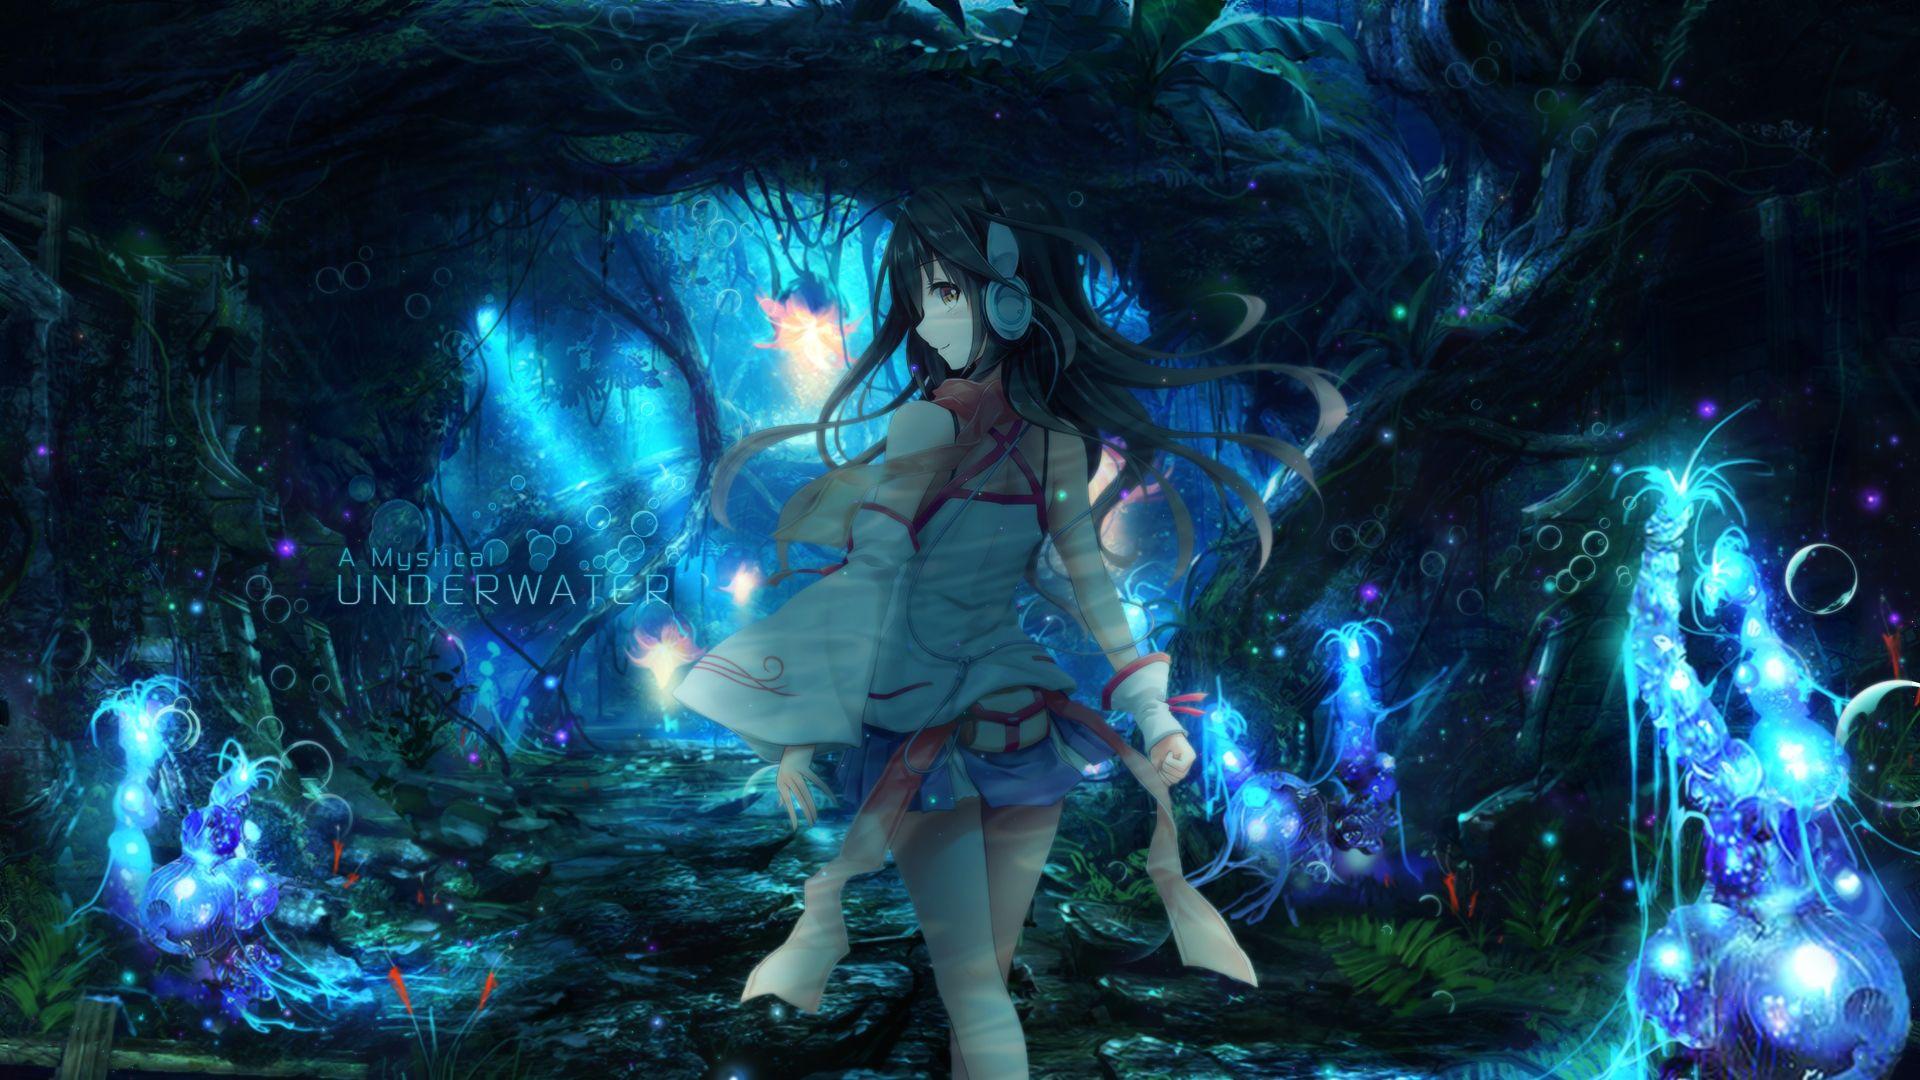 Underwater tree  Other  Anime Background Wallpapers on Desktop Nexus  Image 2278136